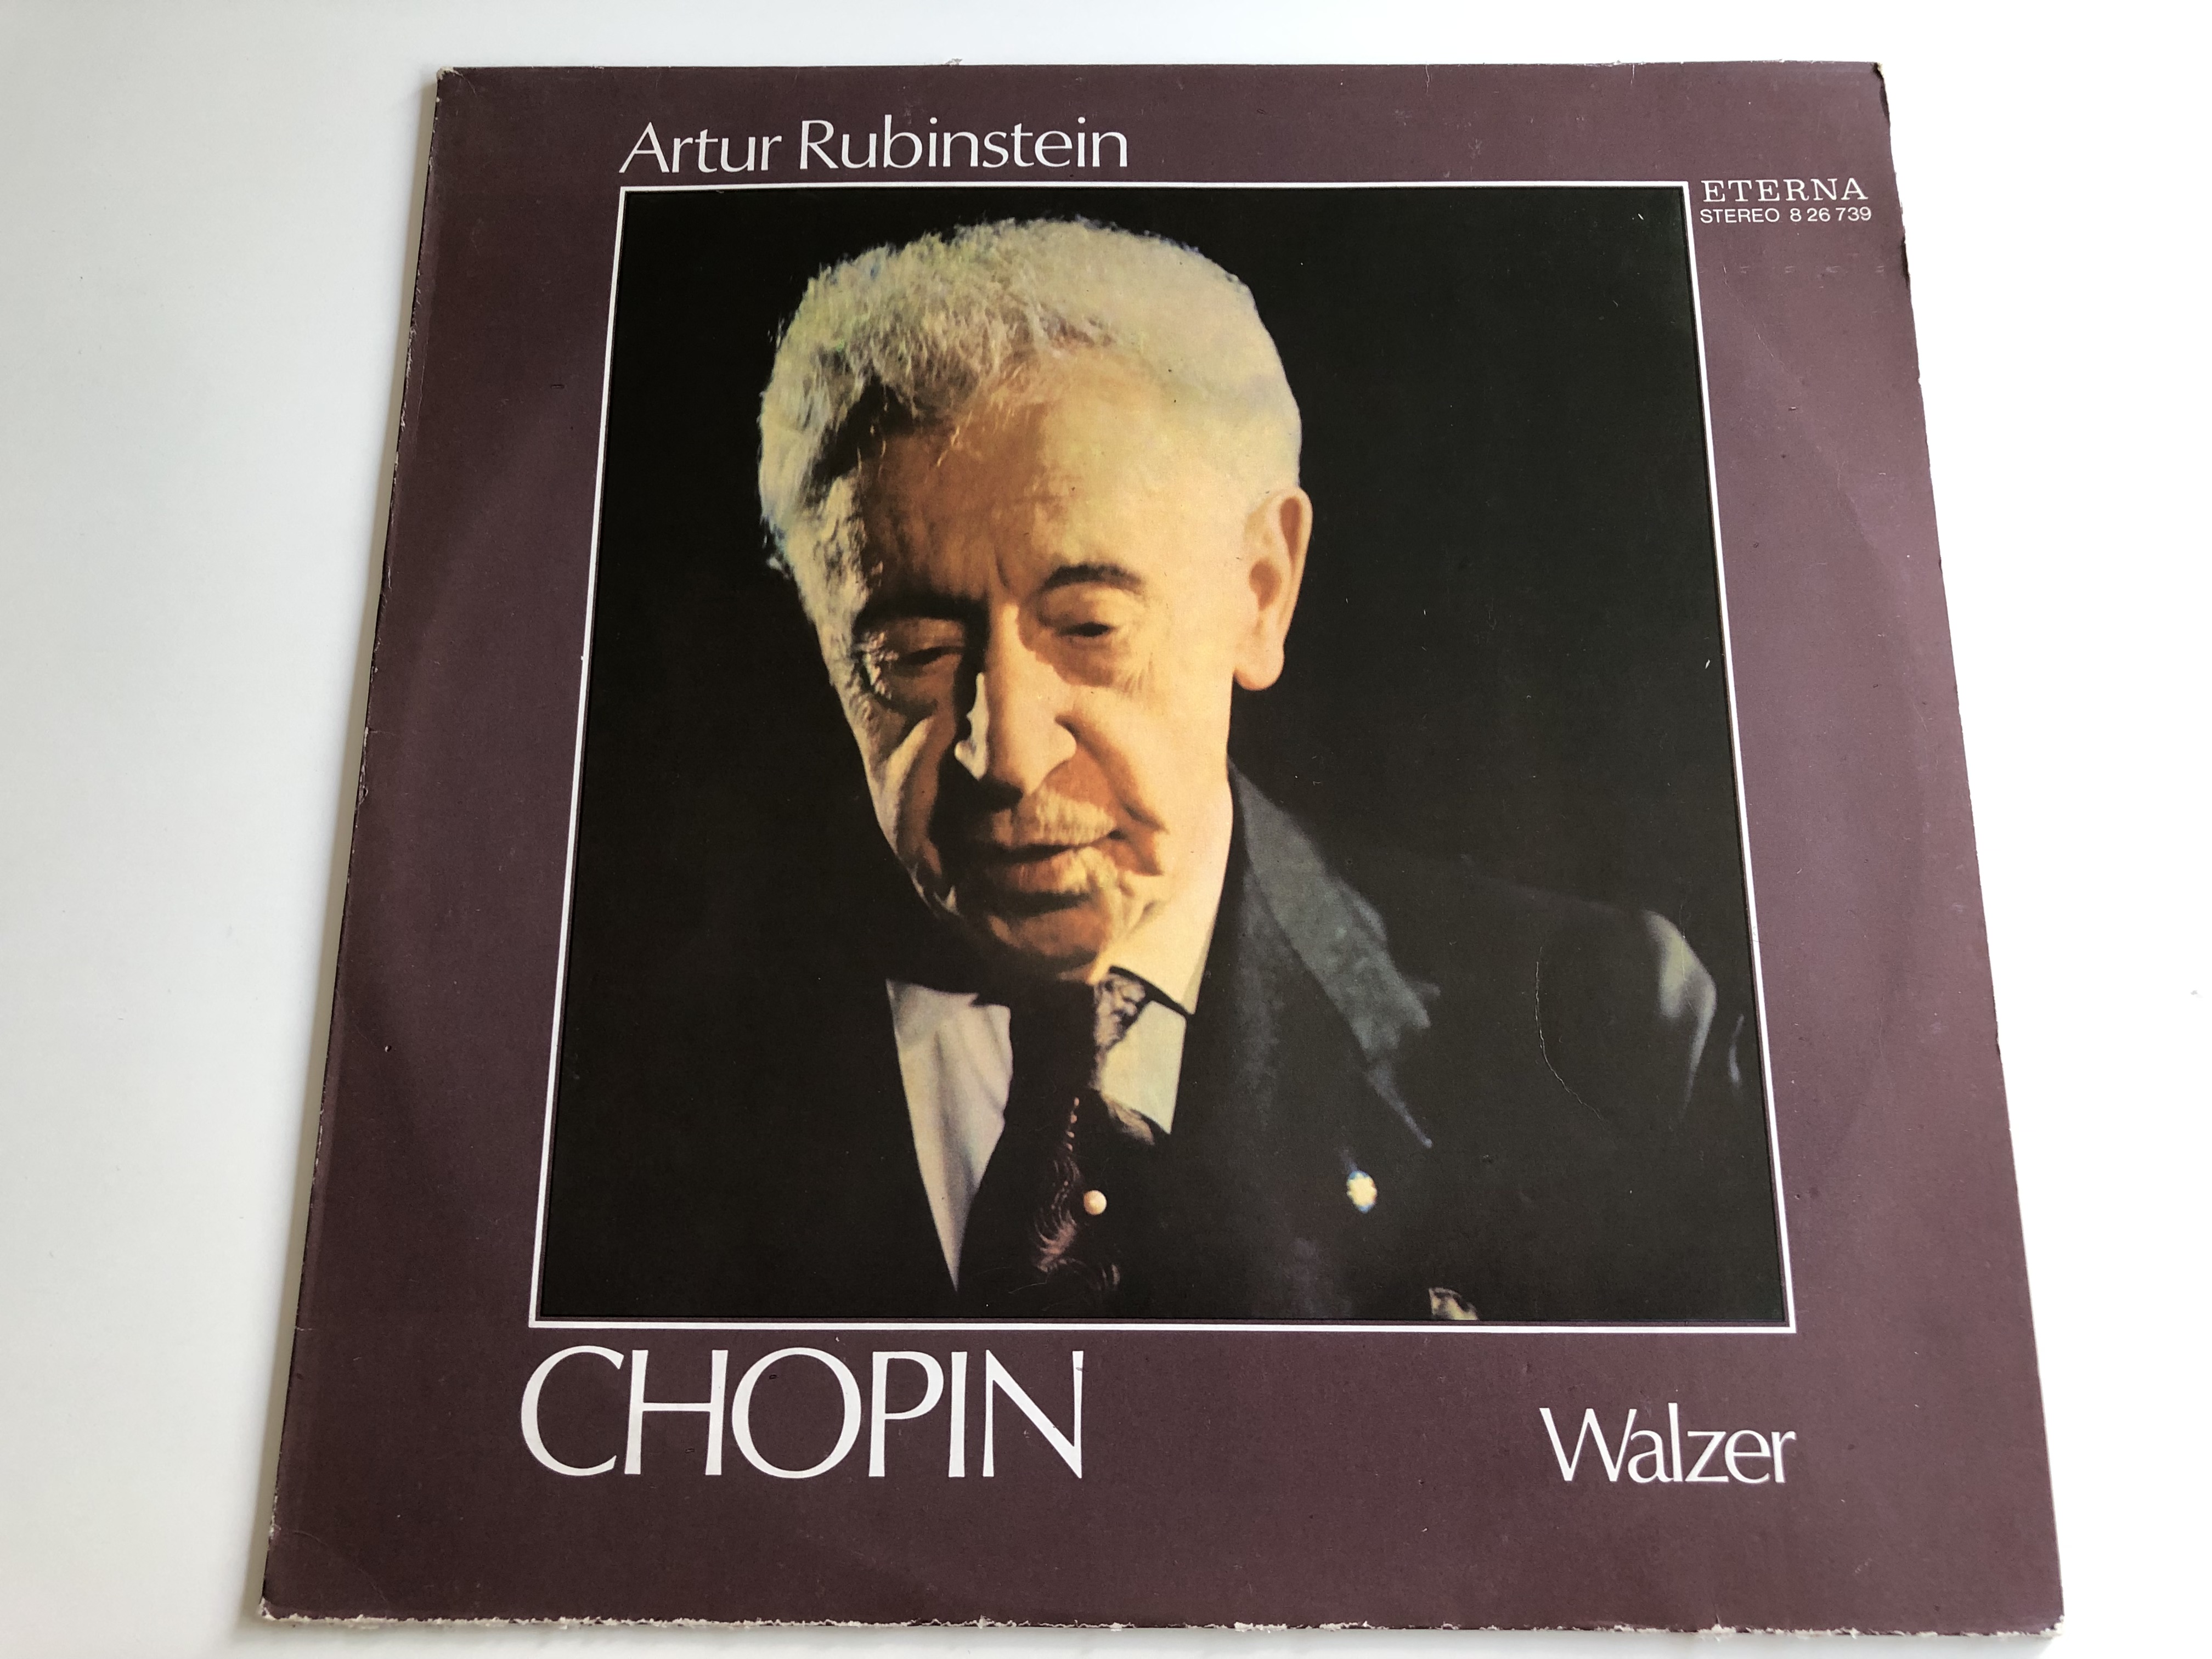 artur-rubinstein-chopin-walzer-fryderyk-chopin-eterna-lp-stereo-8-26-739-1-.jpg